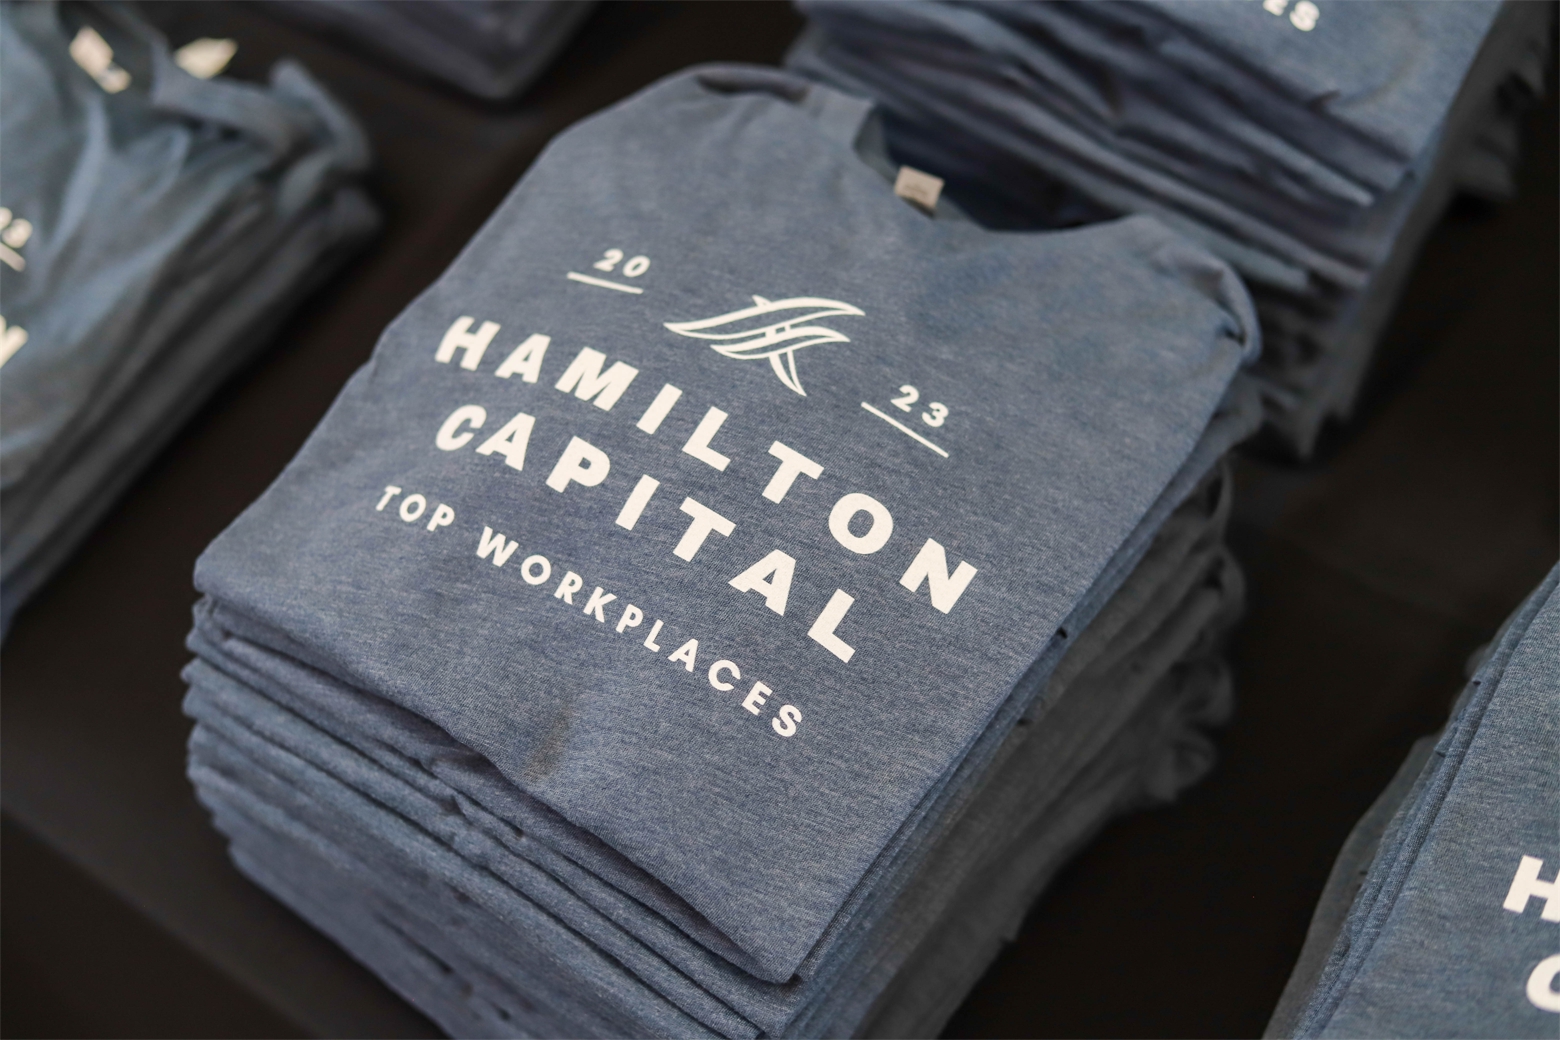 Hamilton Capital - Top Workplace